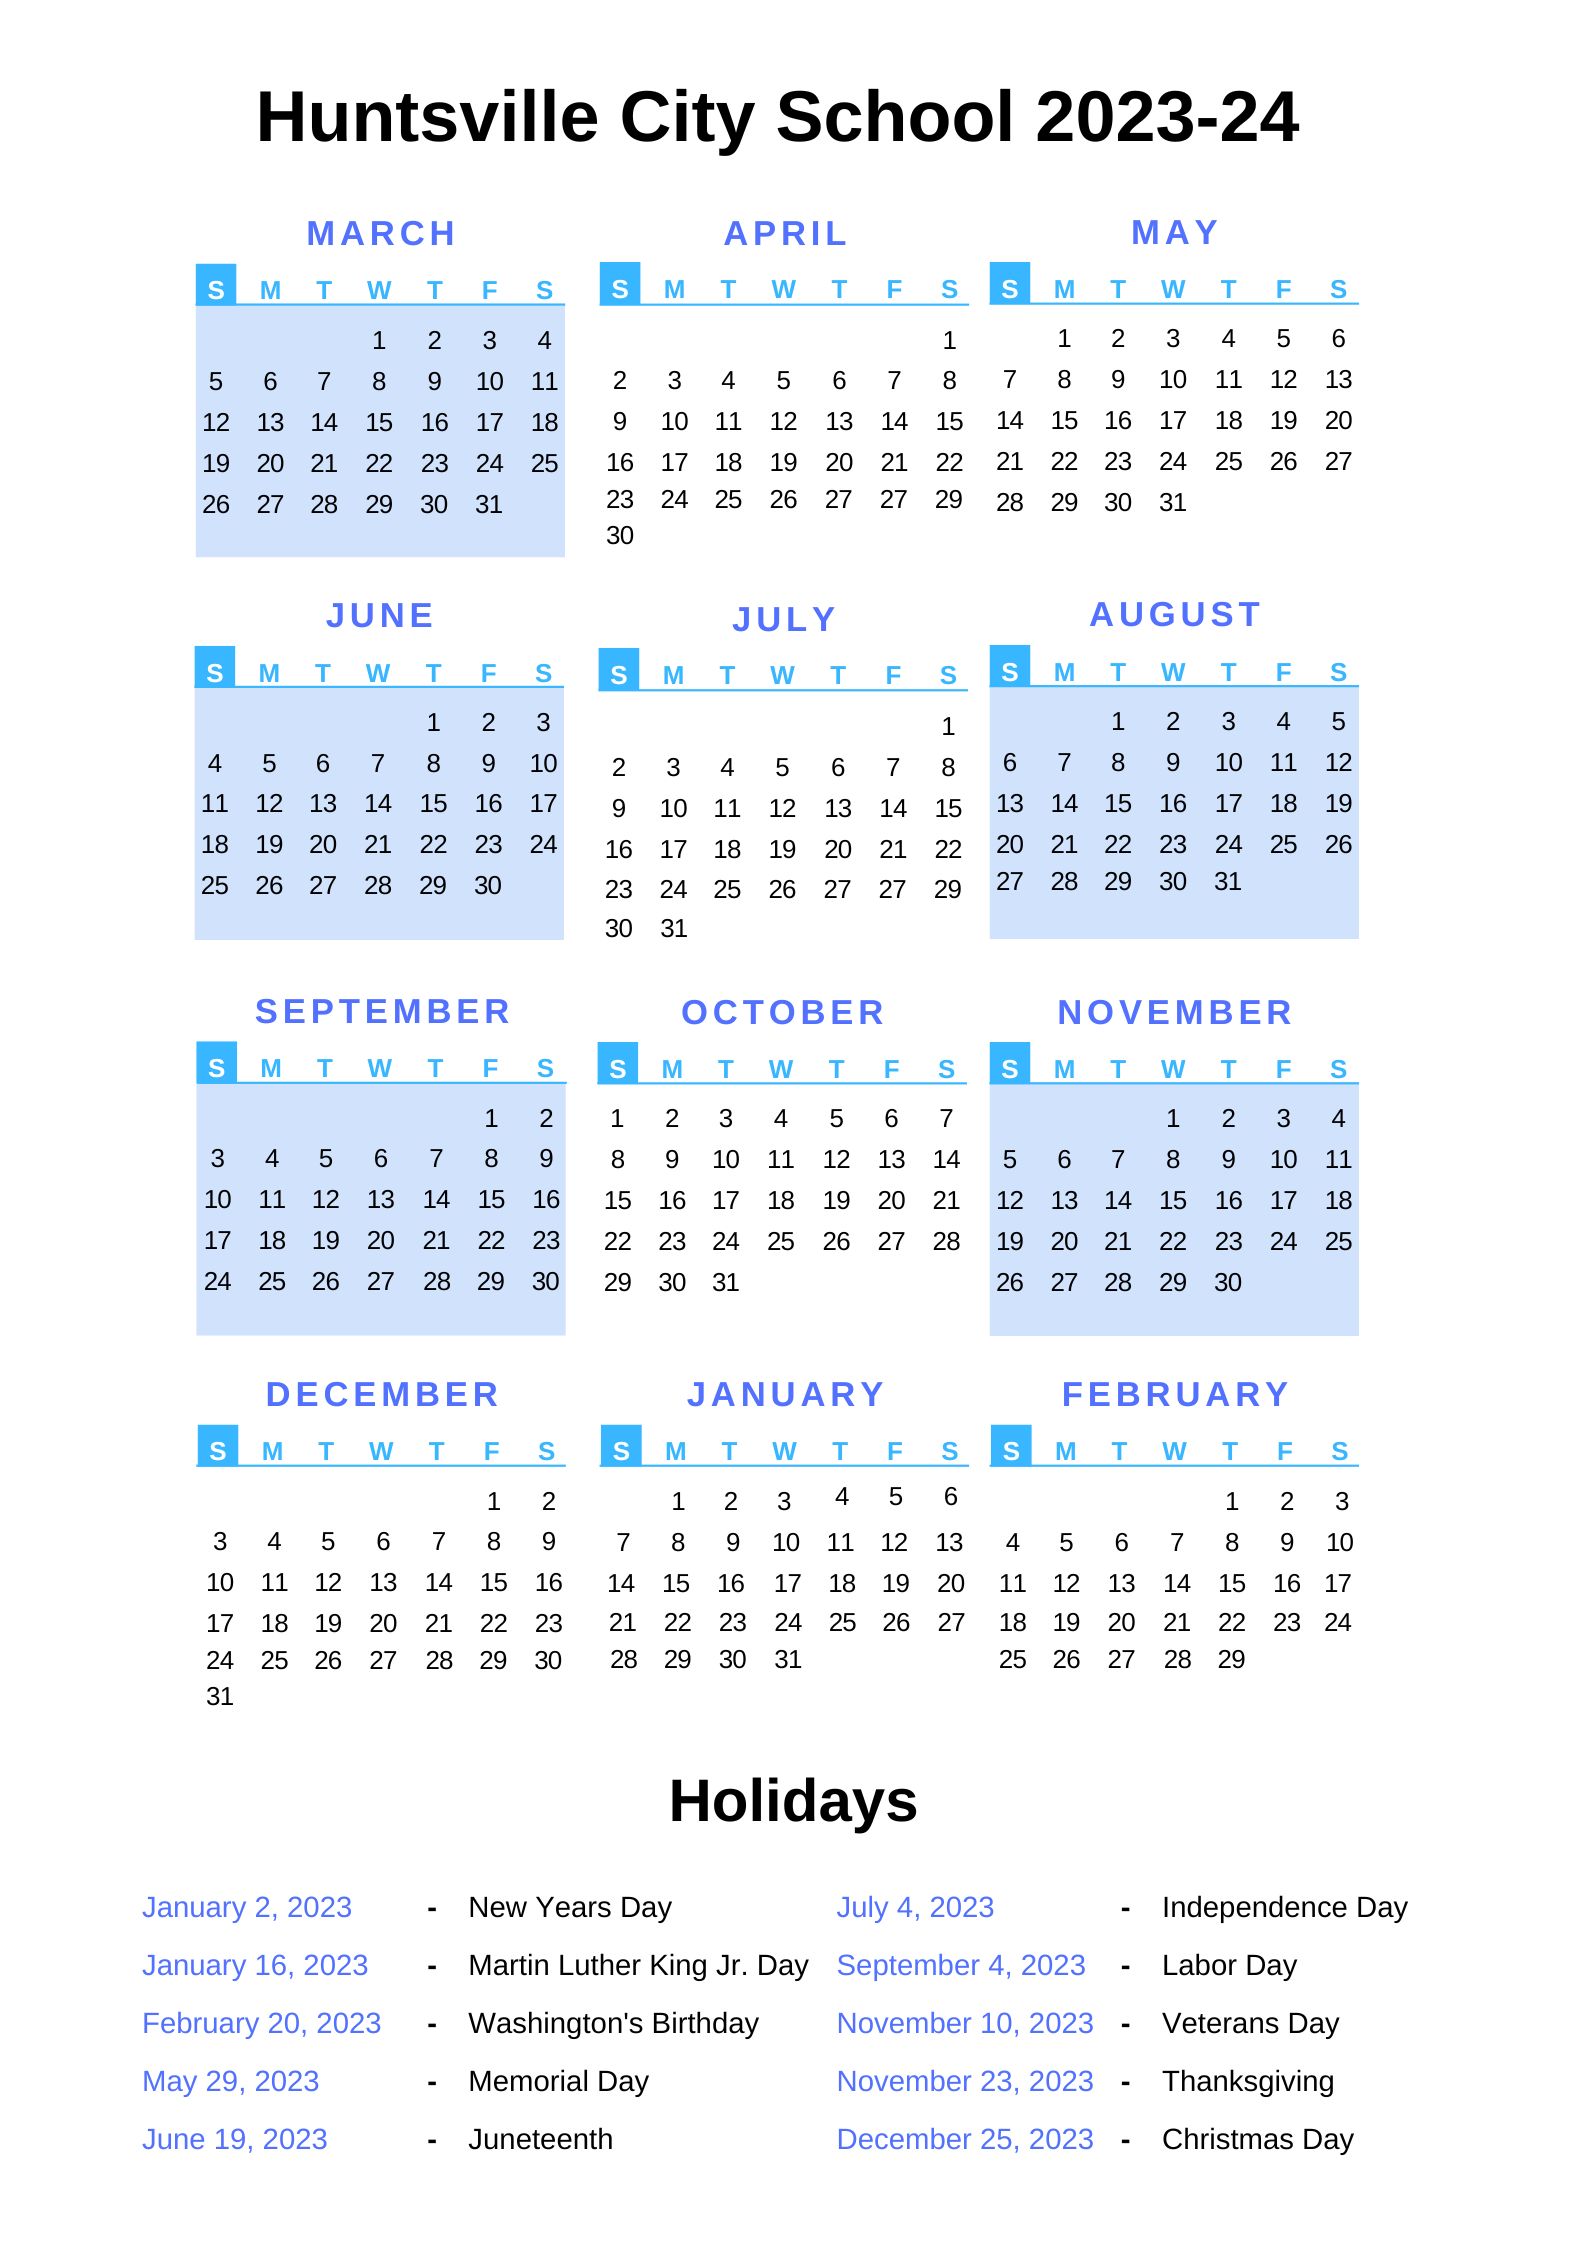 Huntsville City Schools Calendar 2023 24 With Holidays